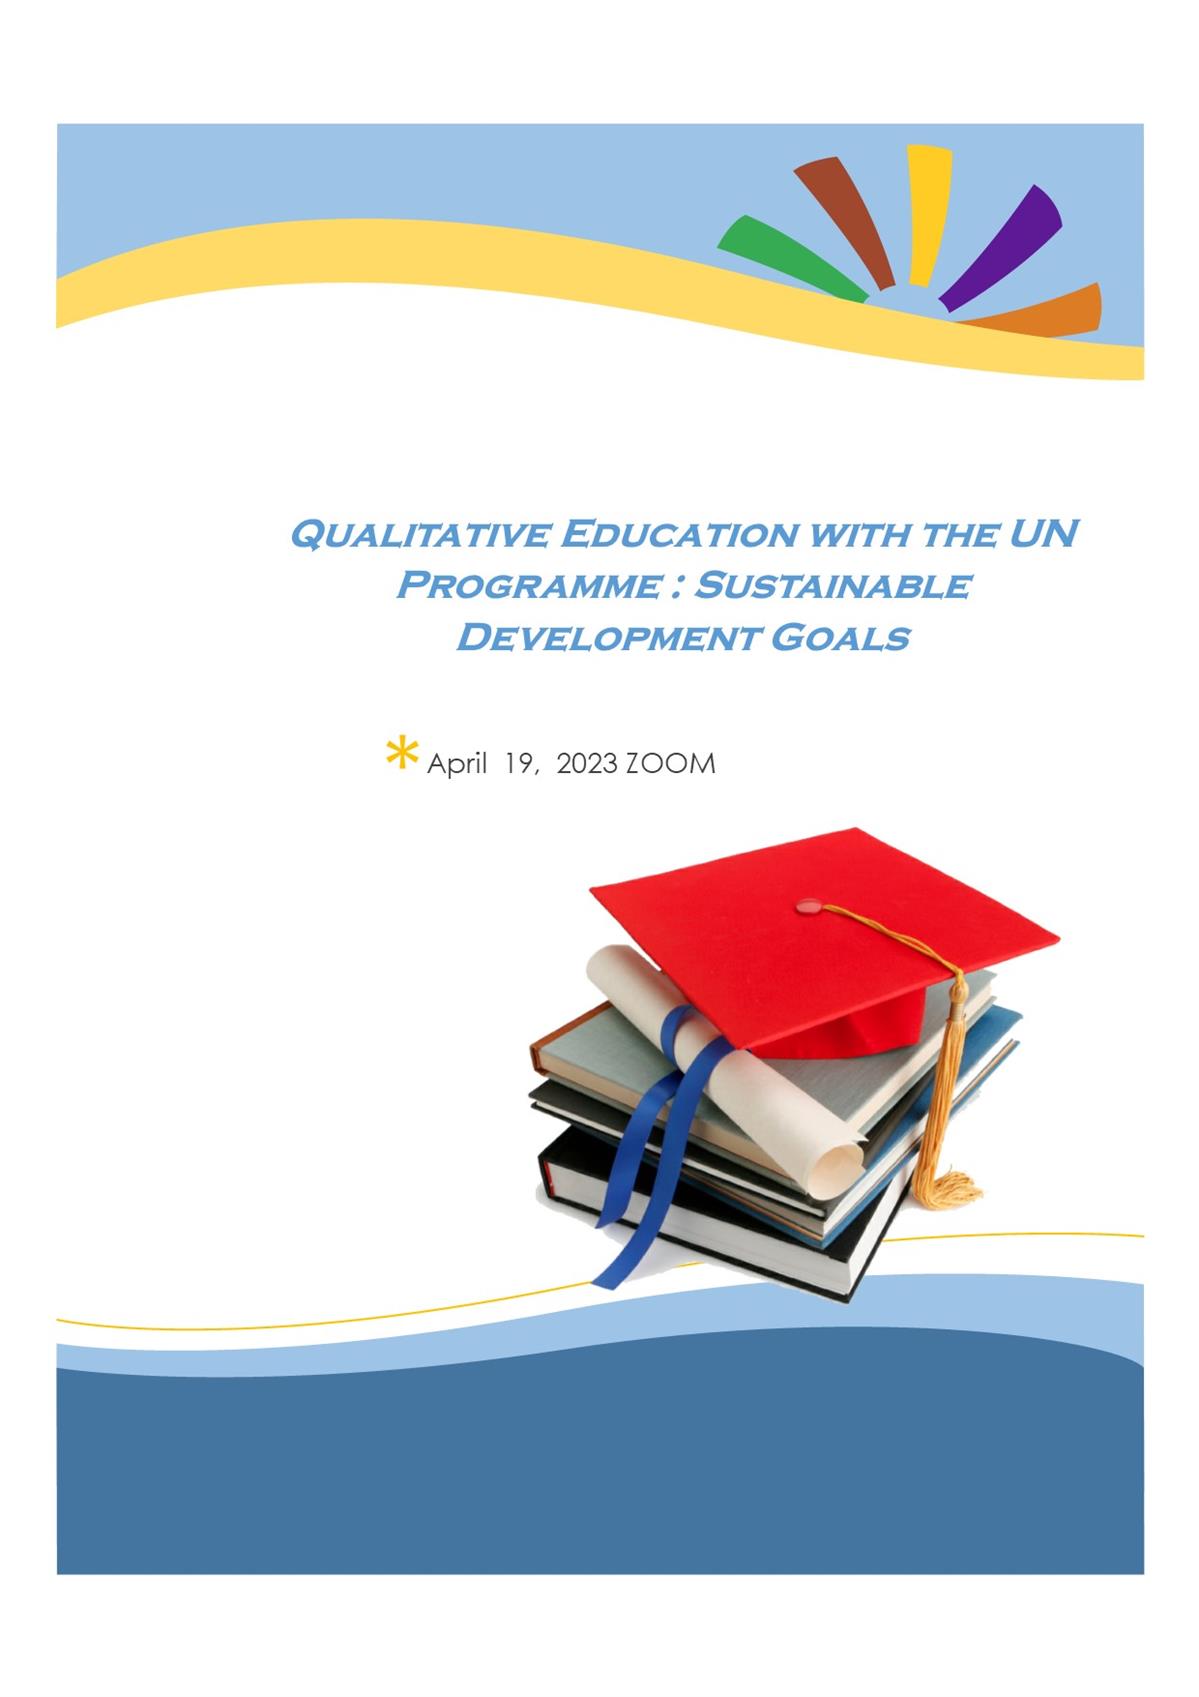 Qualitative Education within the UN Programme: Sustainable Development Goals.